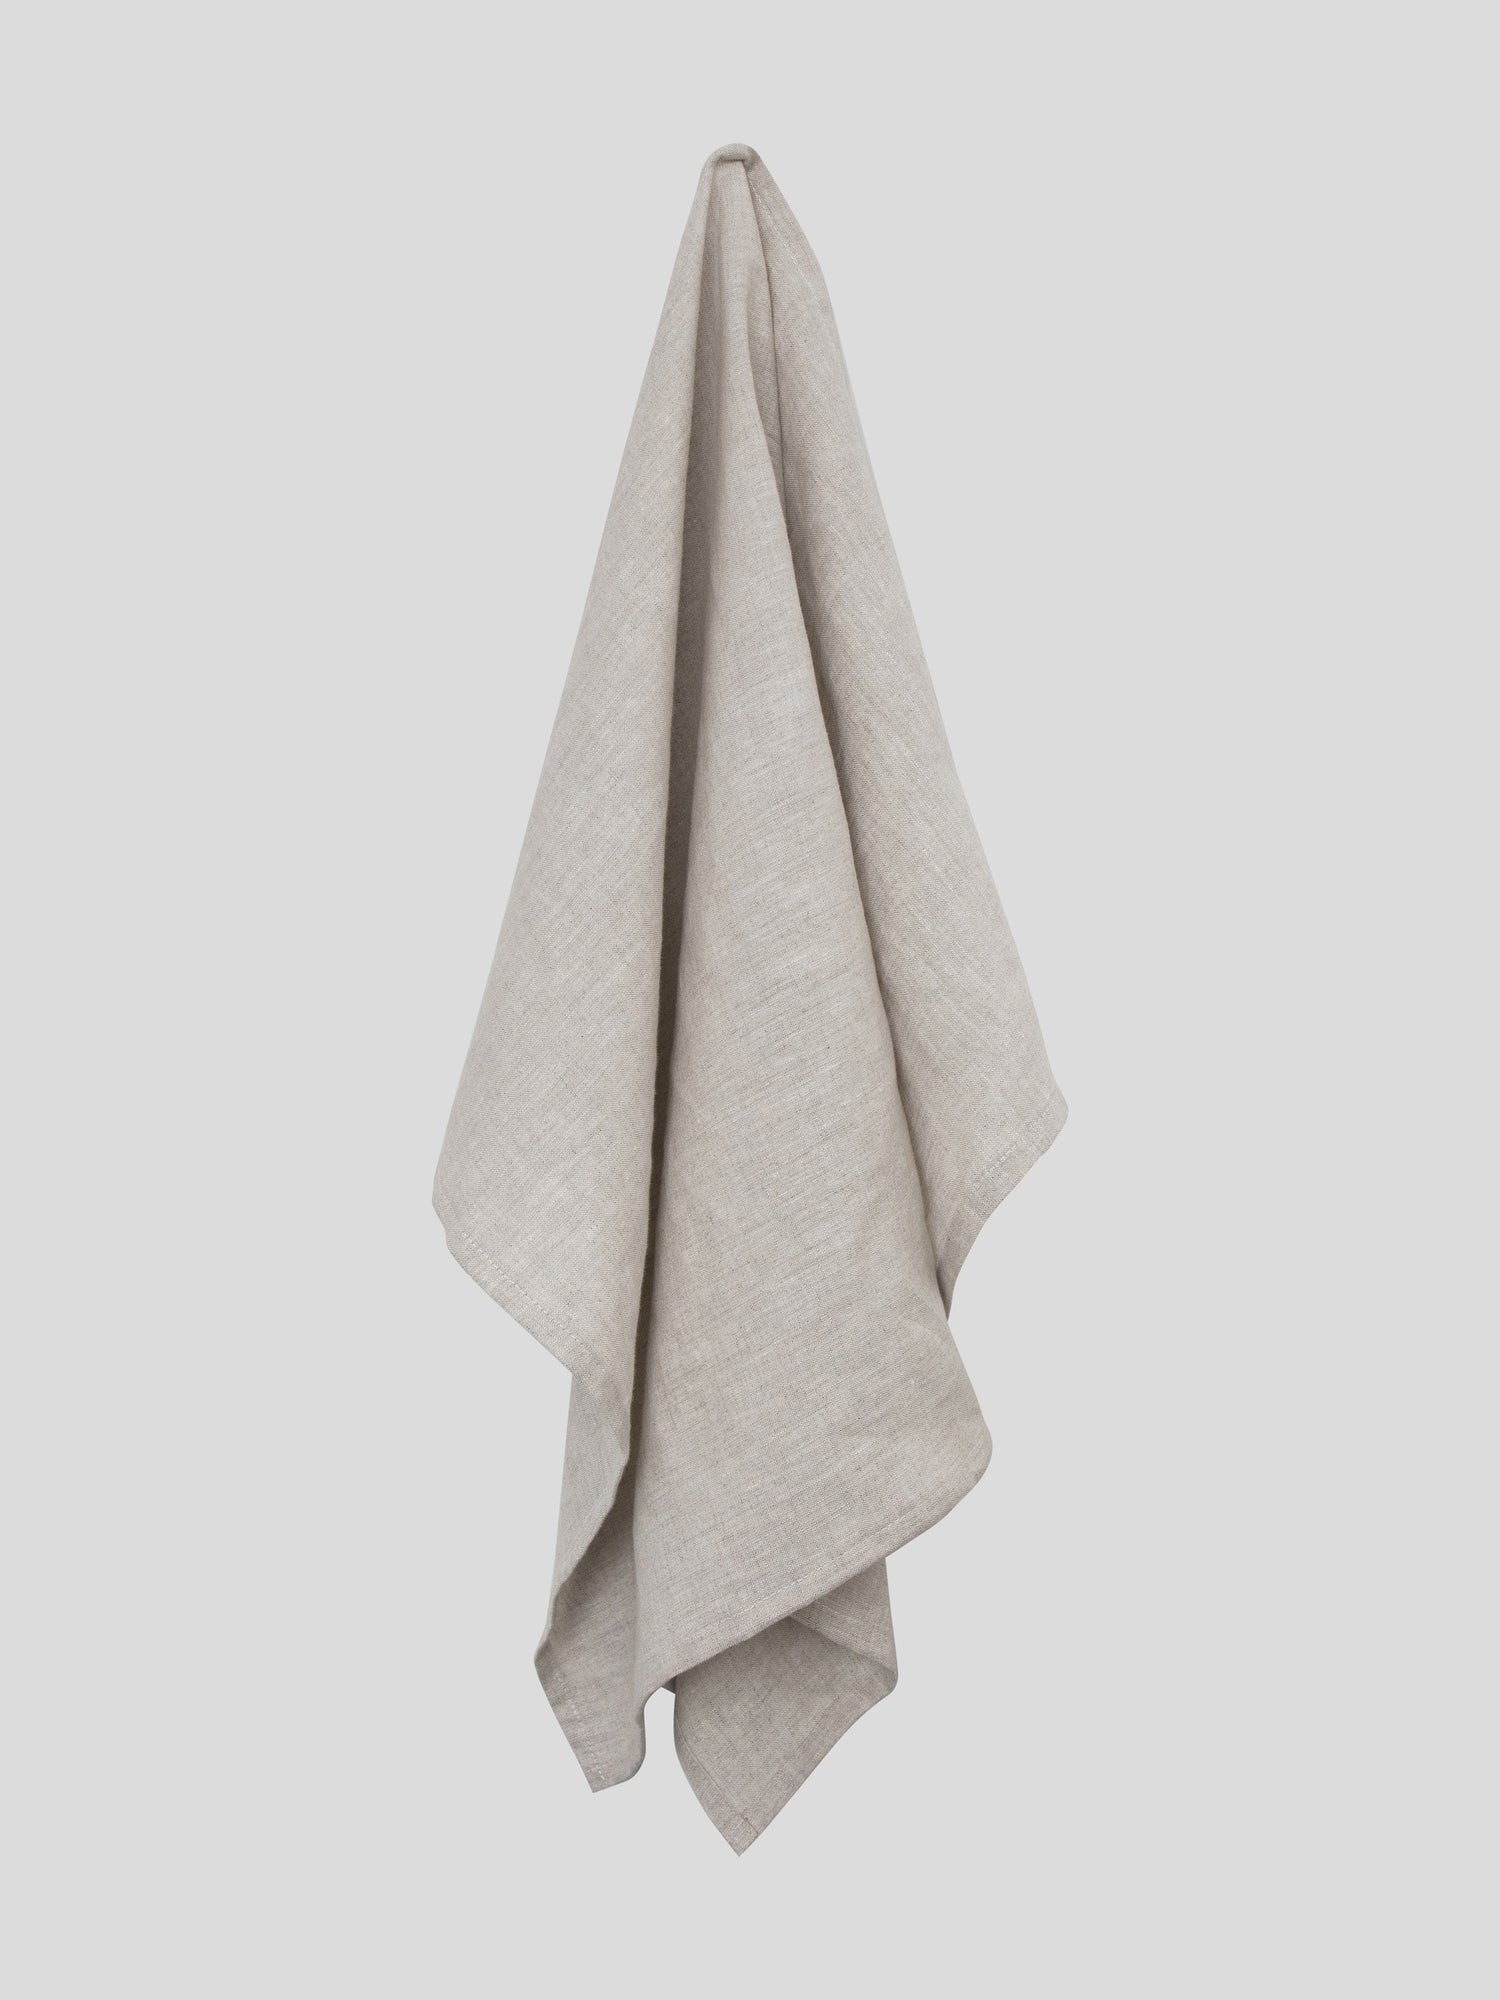 https://www.wallacecotton.com/content/products/loft-linen-tea-towel-1-natural-1-8922.jpg?width=1500